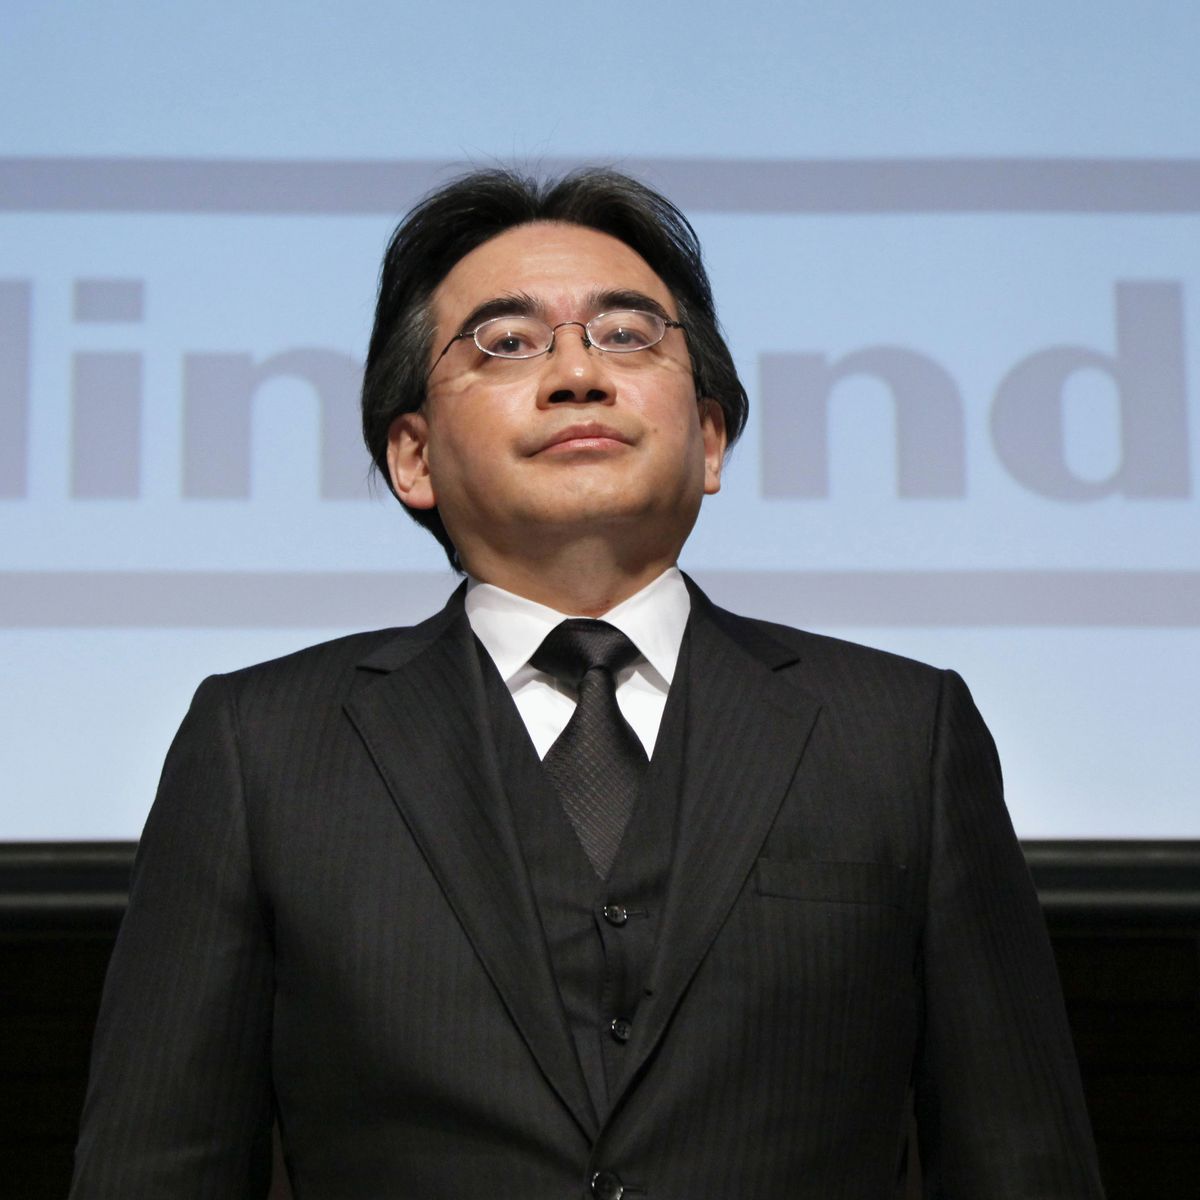 Nintendo president Satoru Iwata passes away